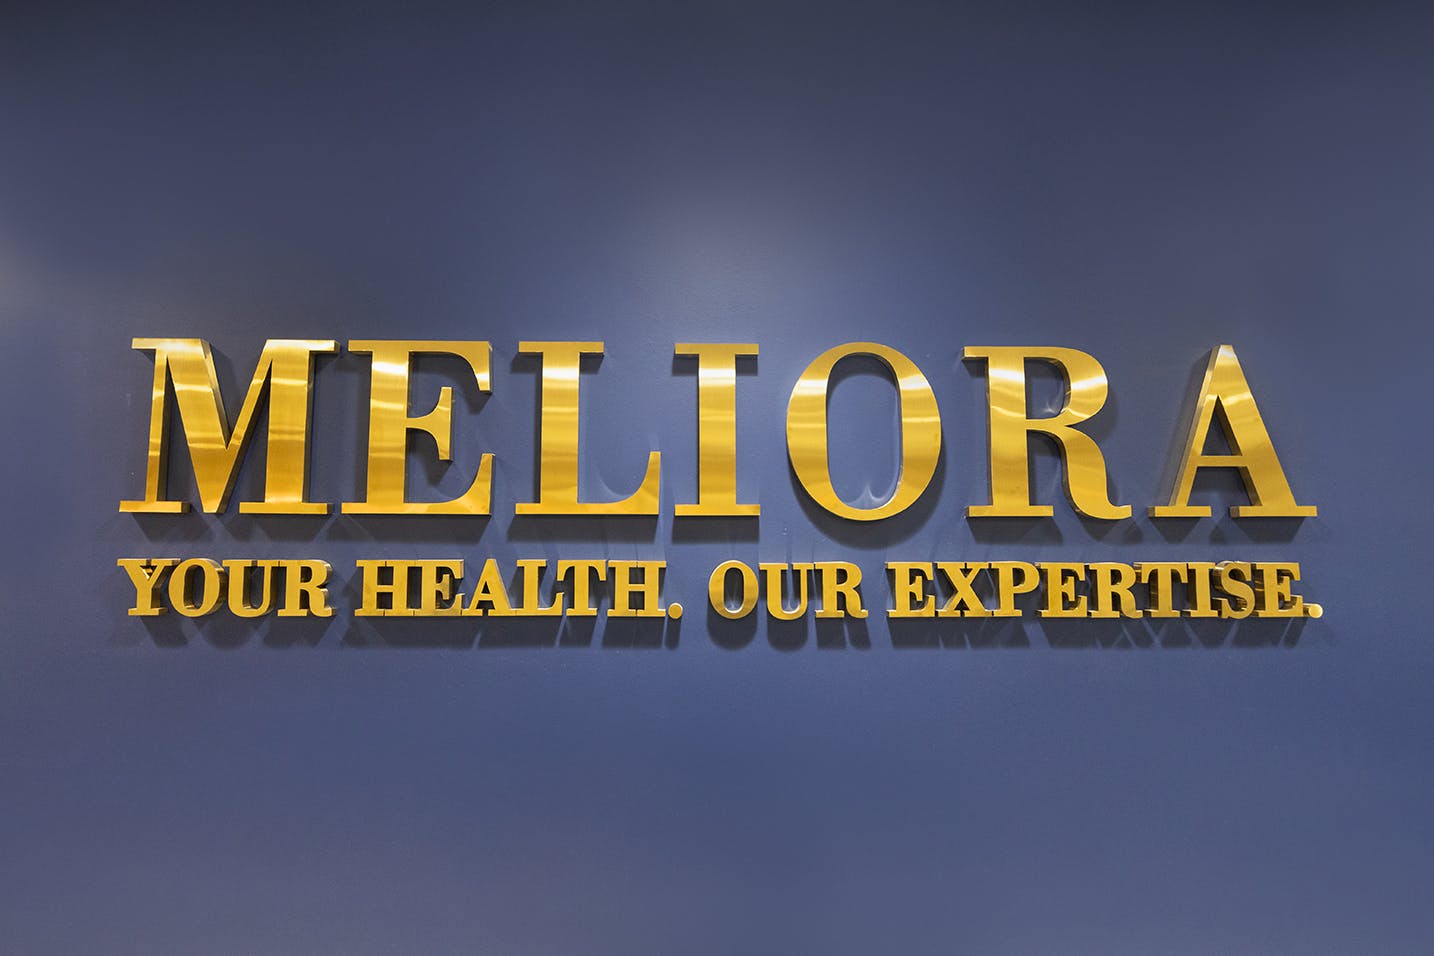 Meliora doctors